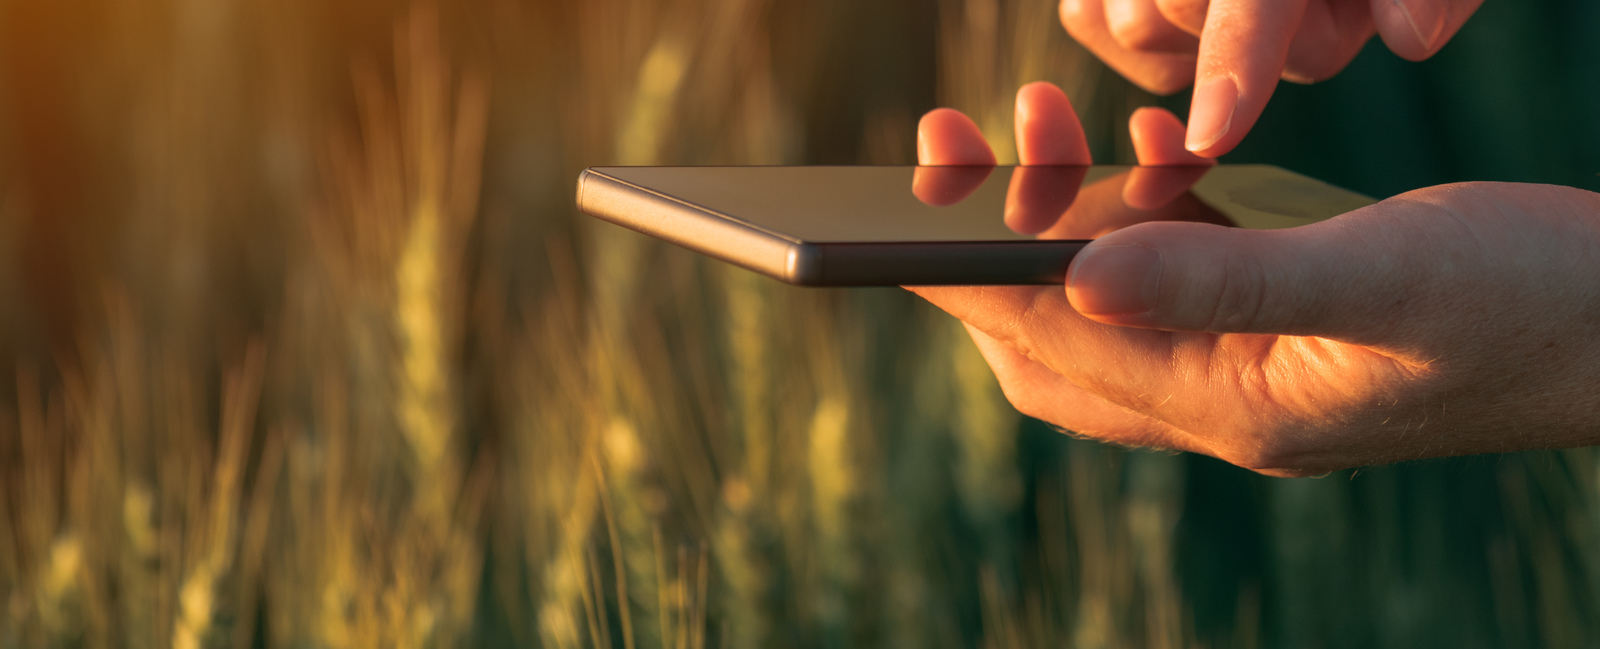 Farmer checking digital farming terms on smartphone